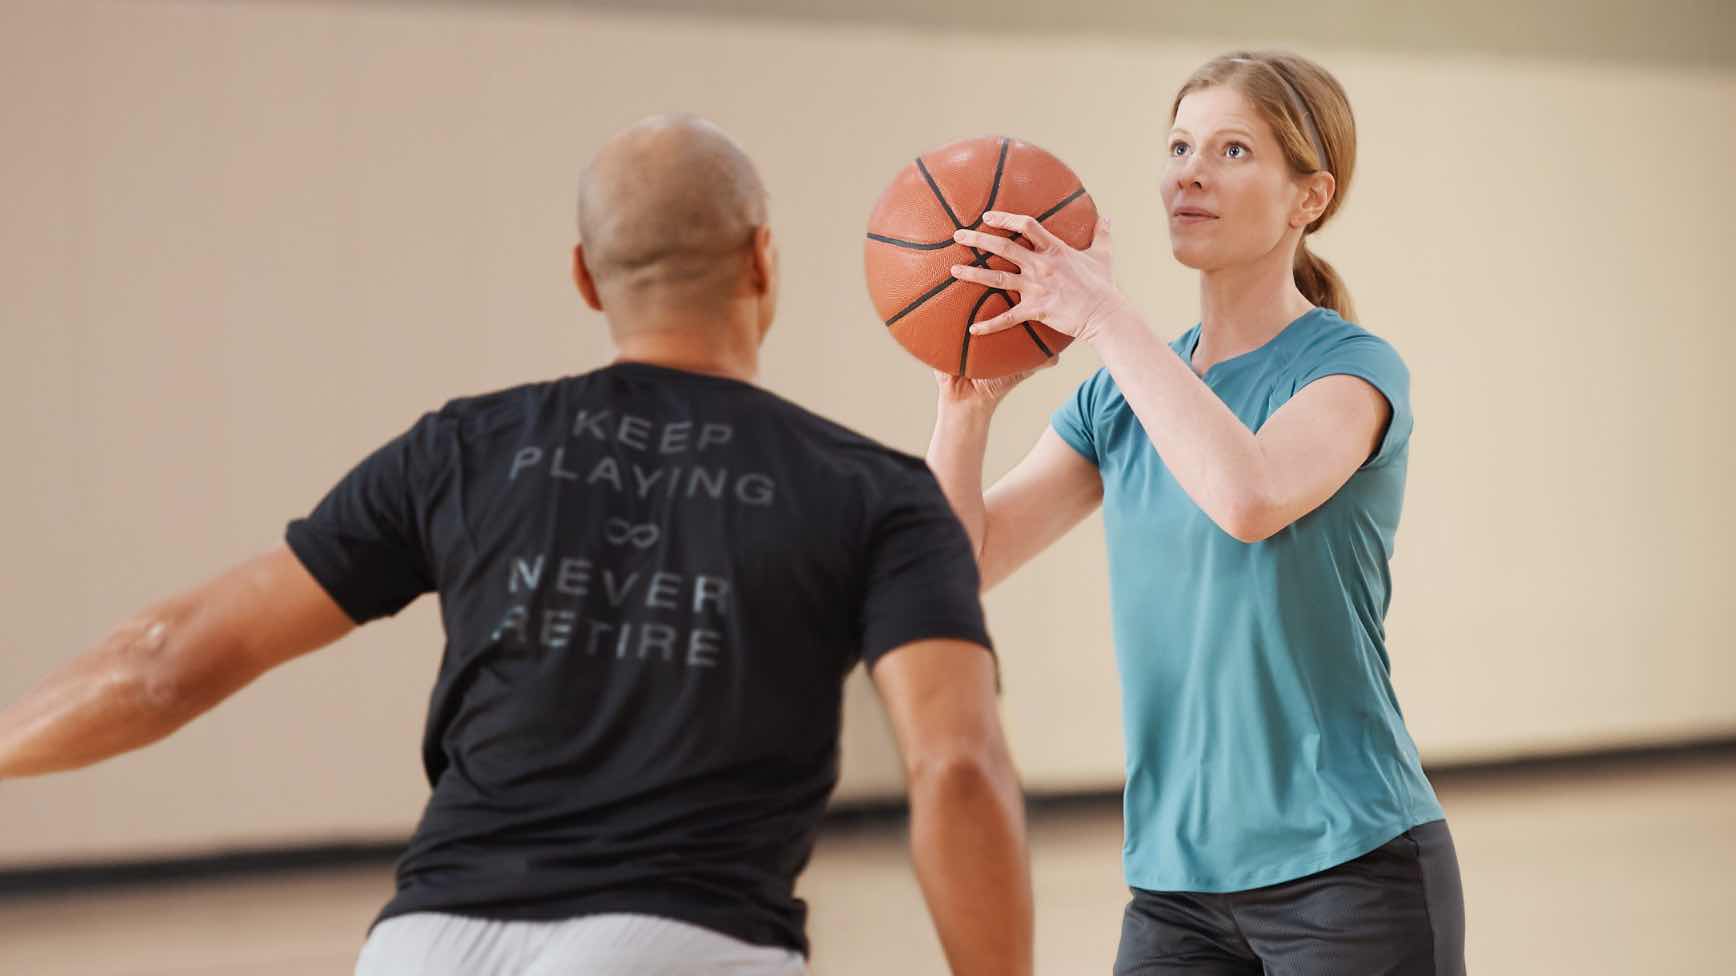 Woman shooting basketball with man guarding her